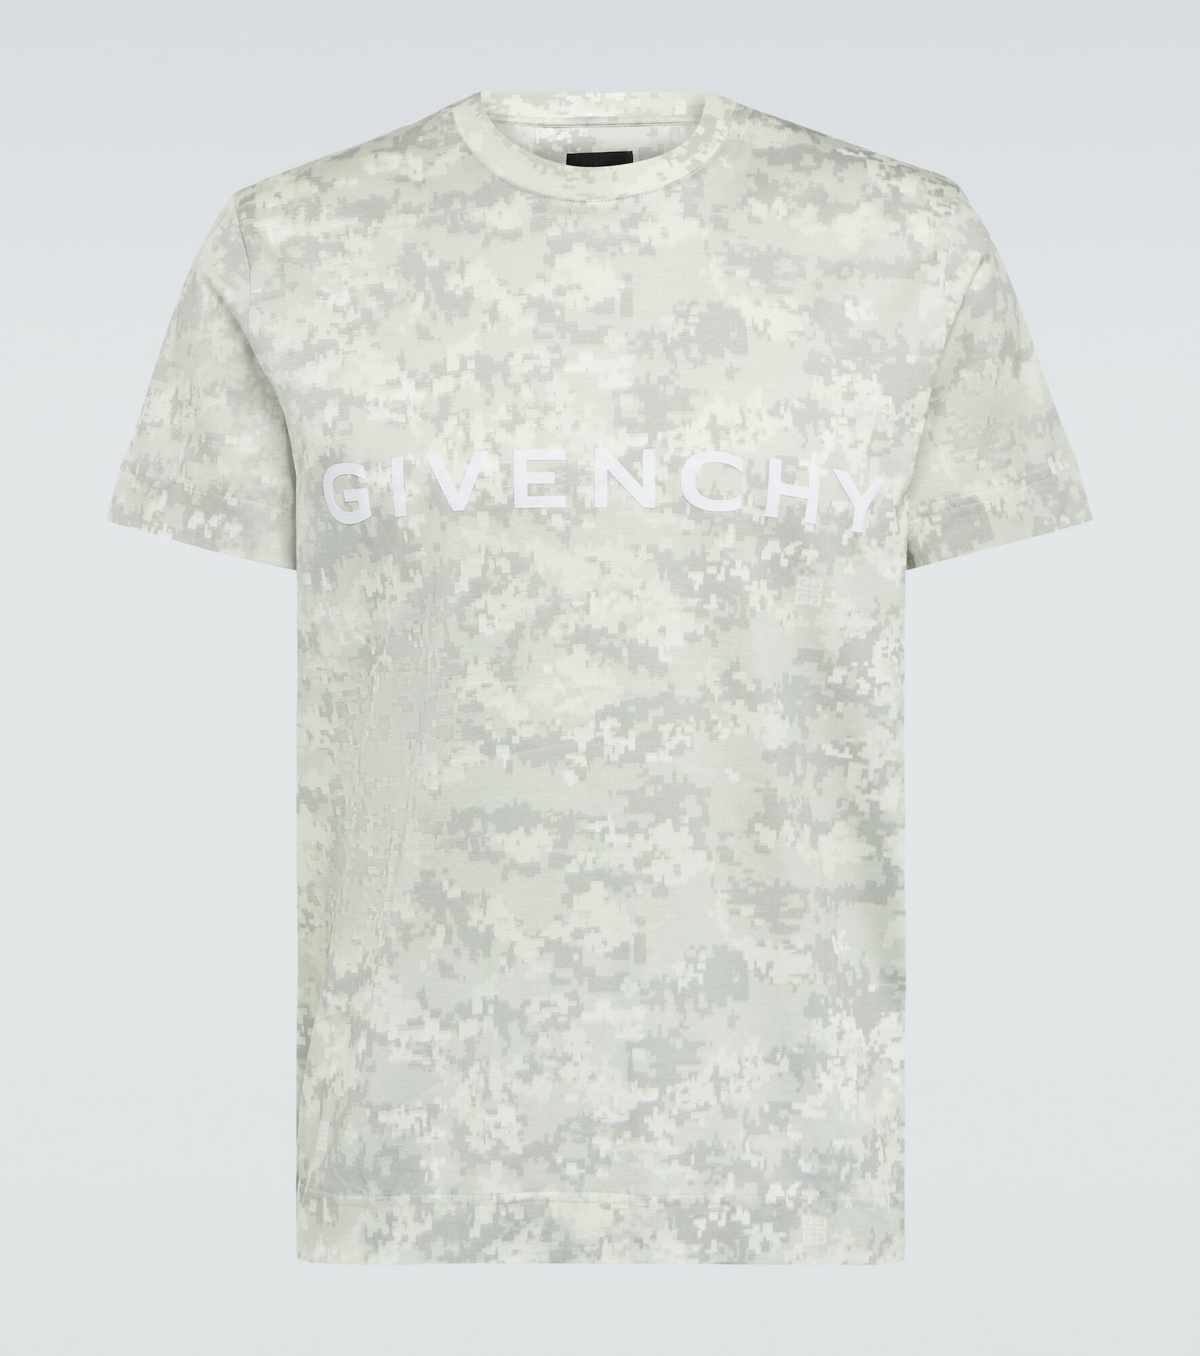 Givenchy - Pixelated logo-print cotton T-shirt